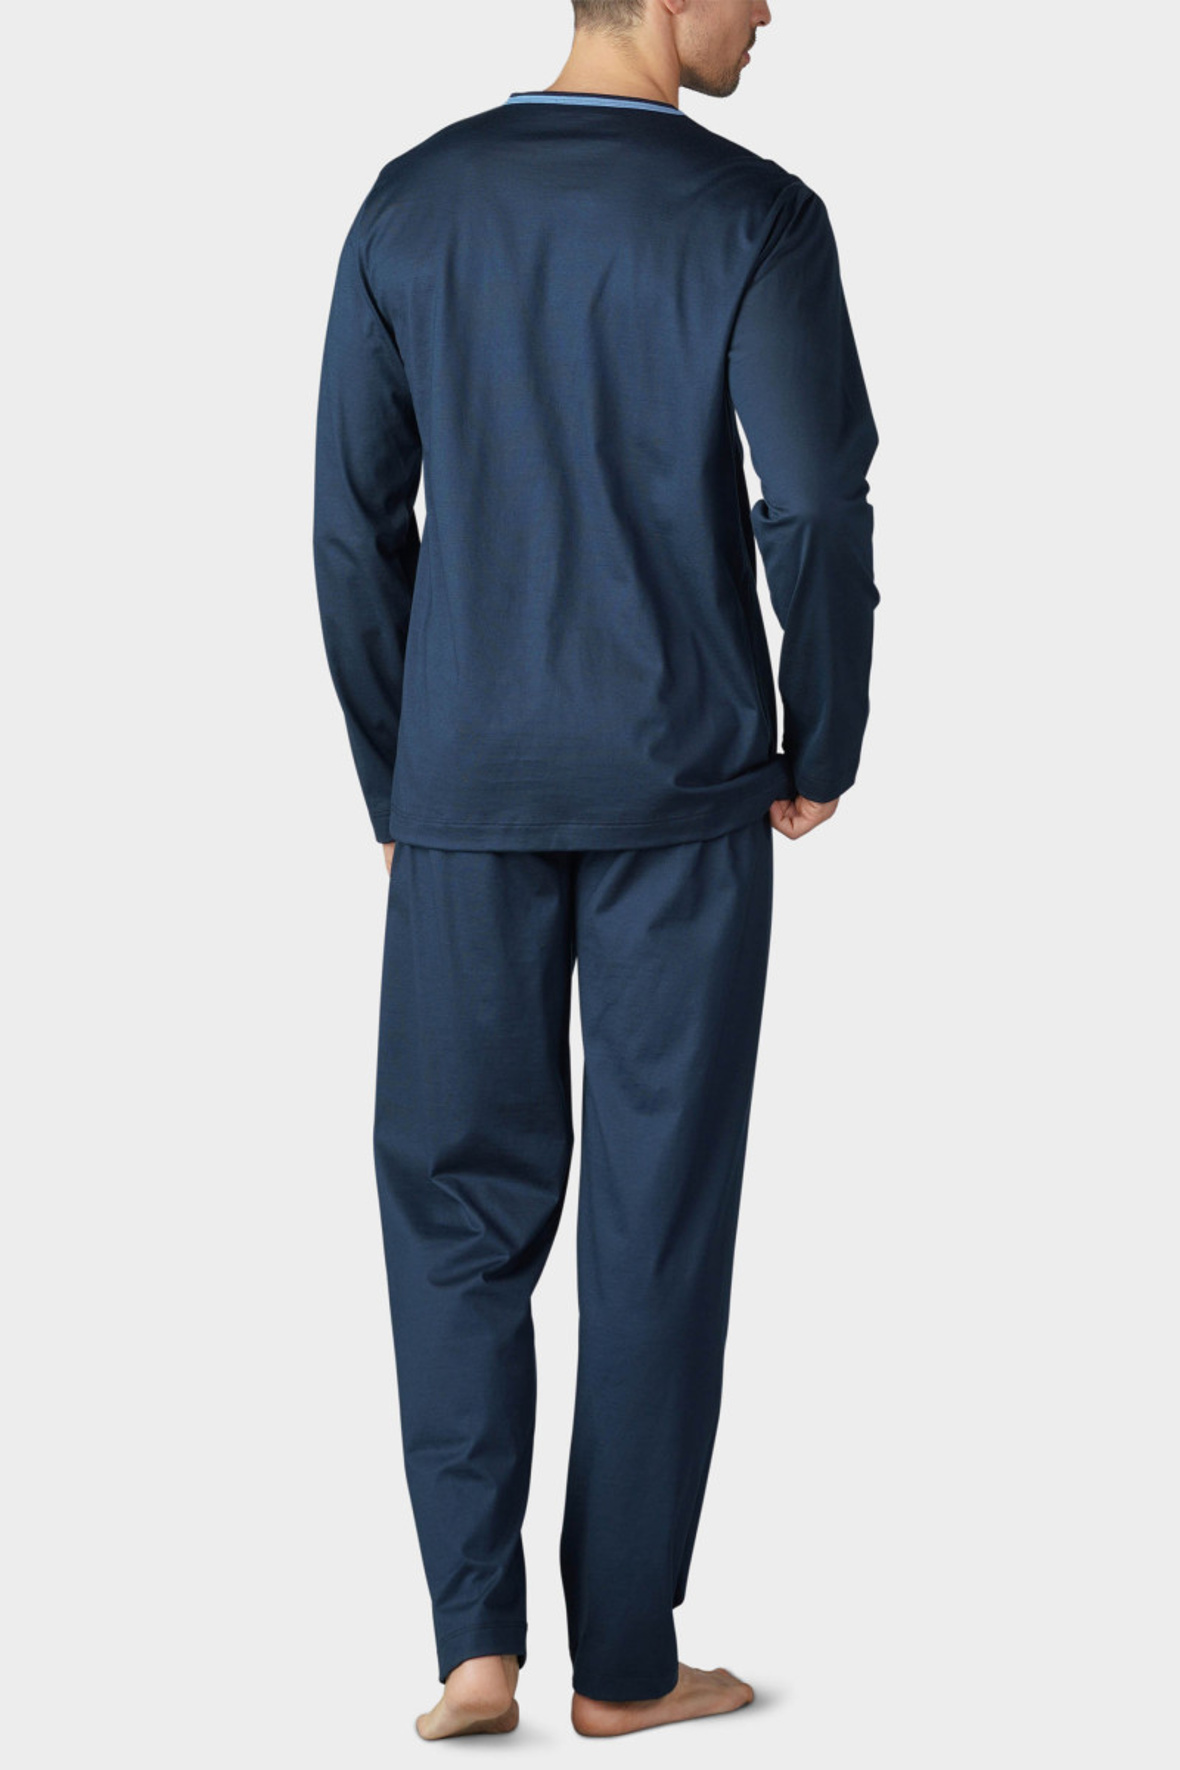 Mey Uni Basic - HERRE pyjamas mørkeblå med lyseblå Lohse